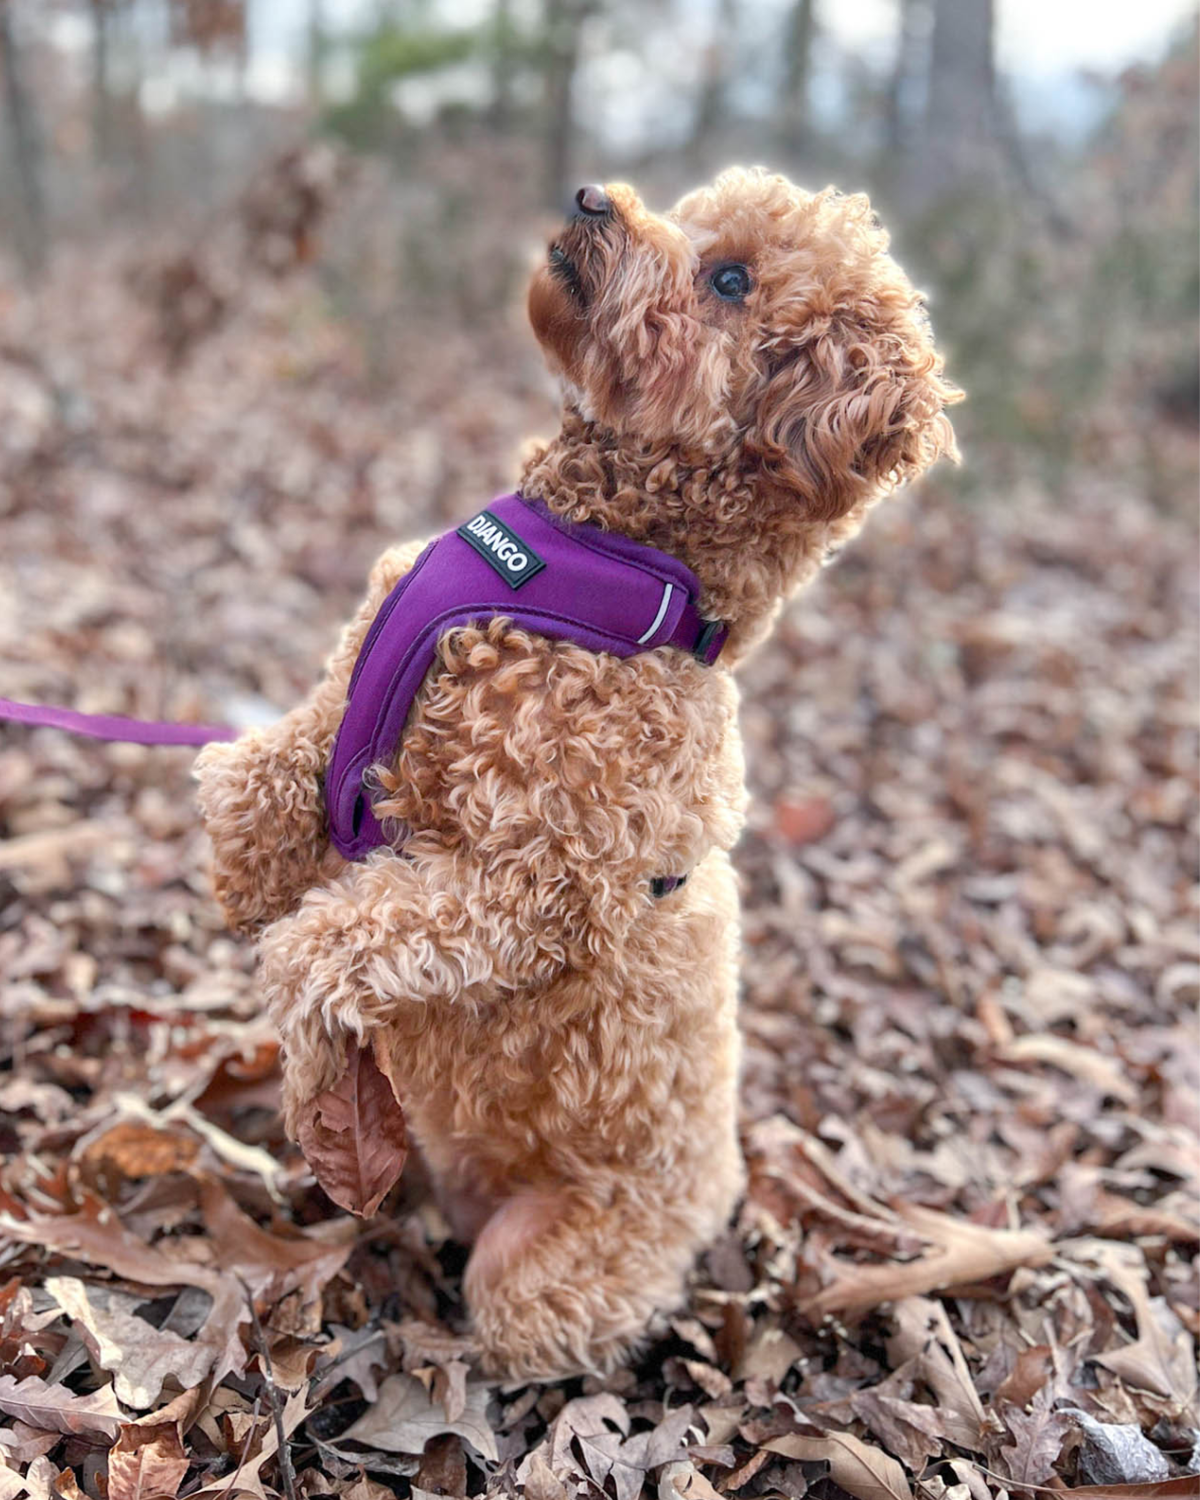 Django Adventure Dog Harness – Comfortable, Durable, and Reflective Neoprene Dog Harness for Outdoor Adventures and Everyday Wear – Adjustable